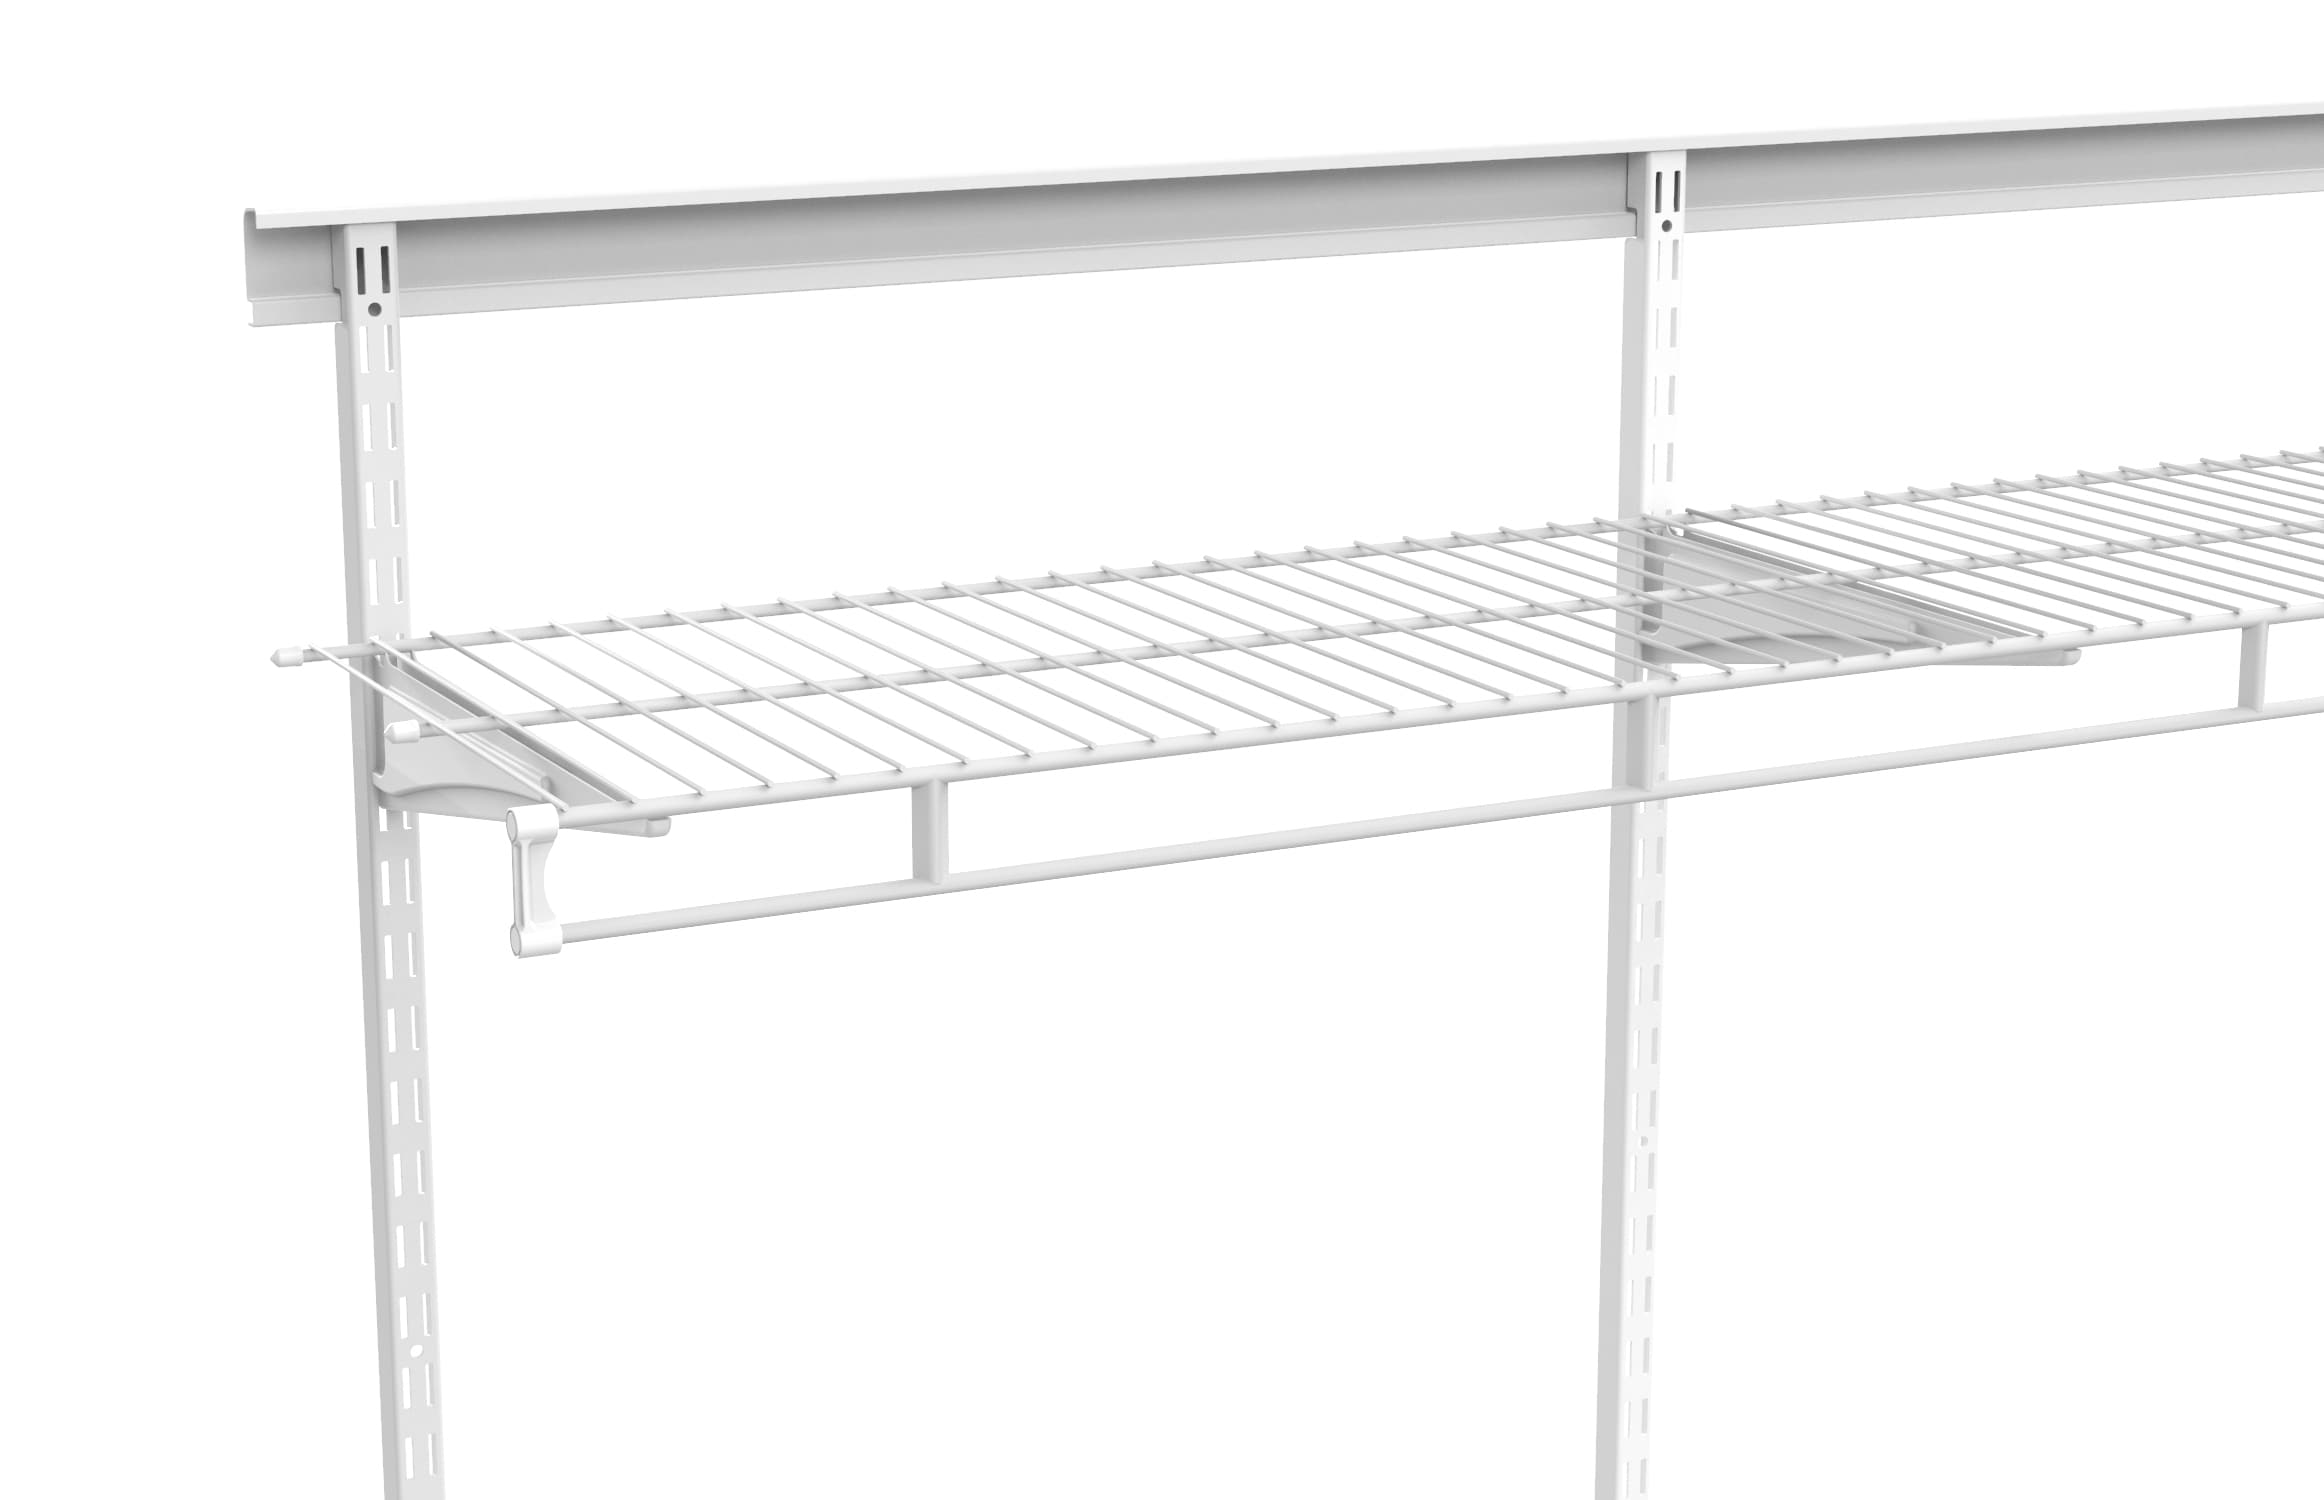 ClosetMaid All Purpose/Linen 8-ft x 12-in White Universal Wire Shelf